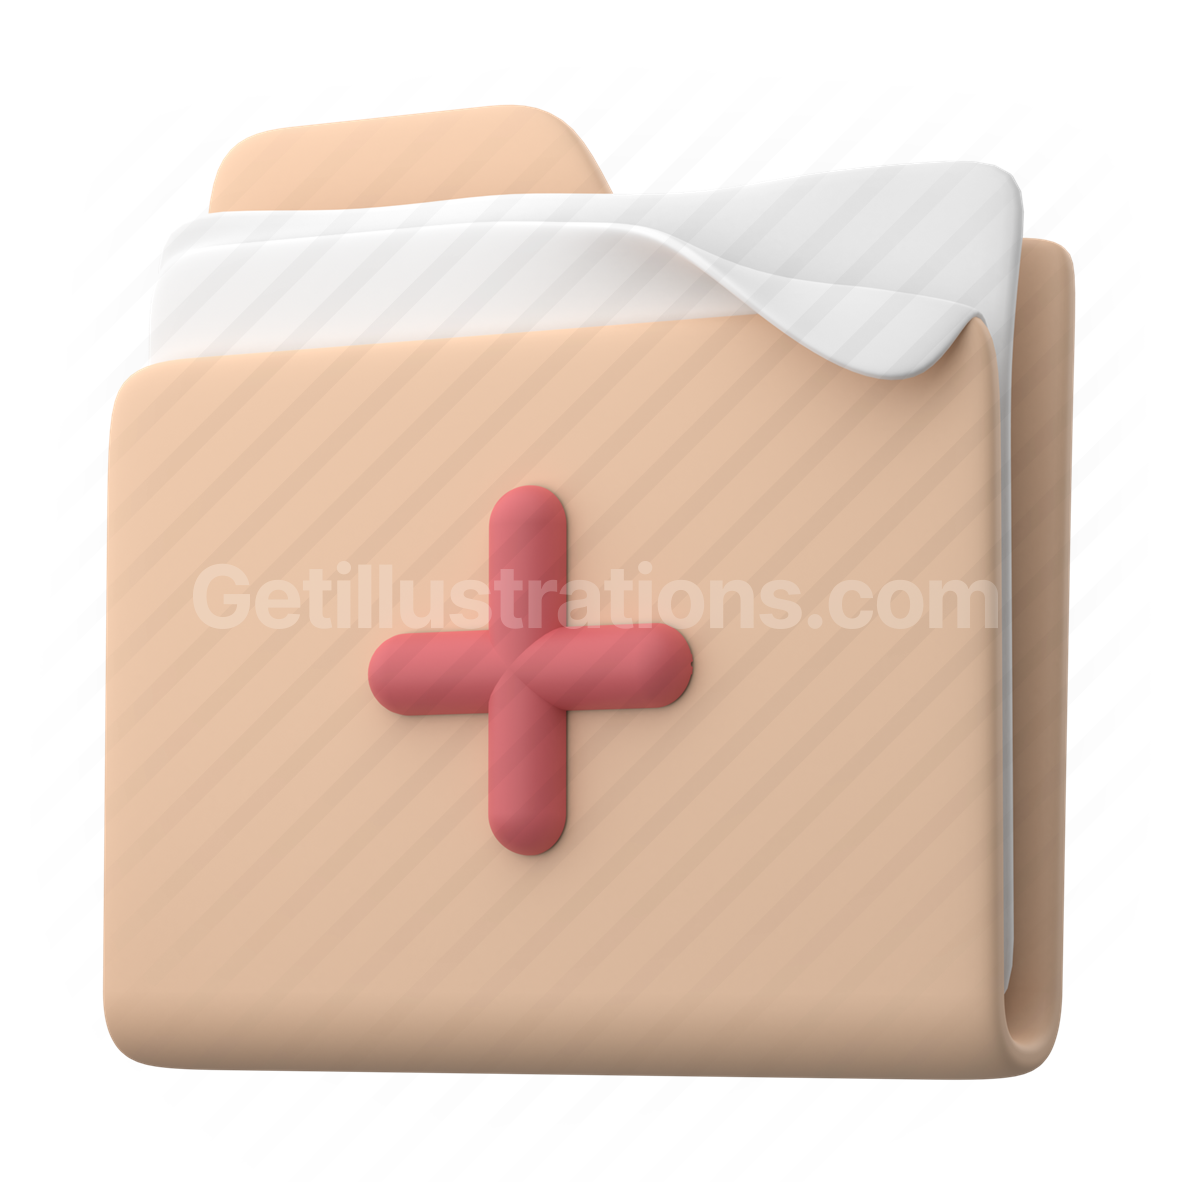 Files and Folders illustration